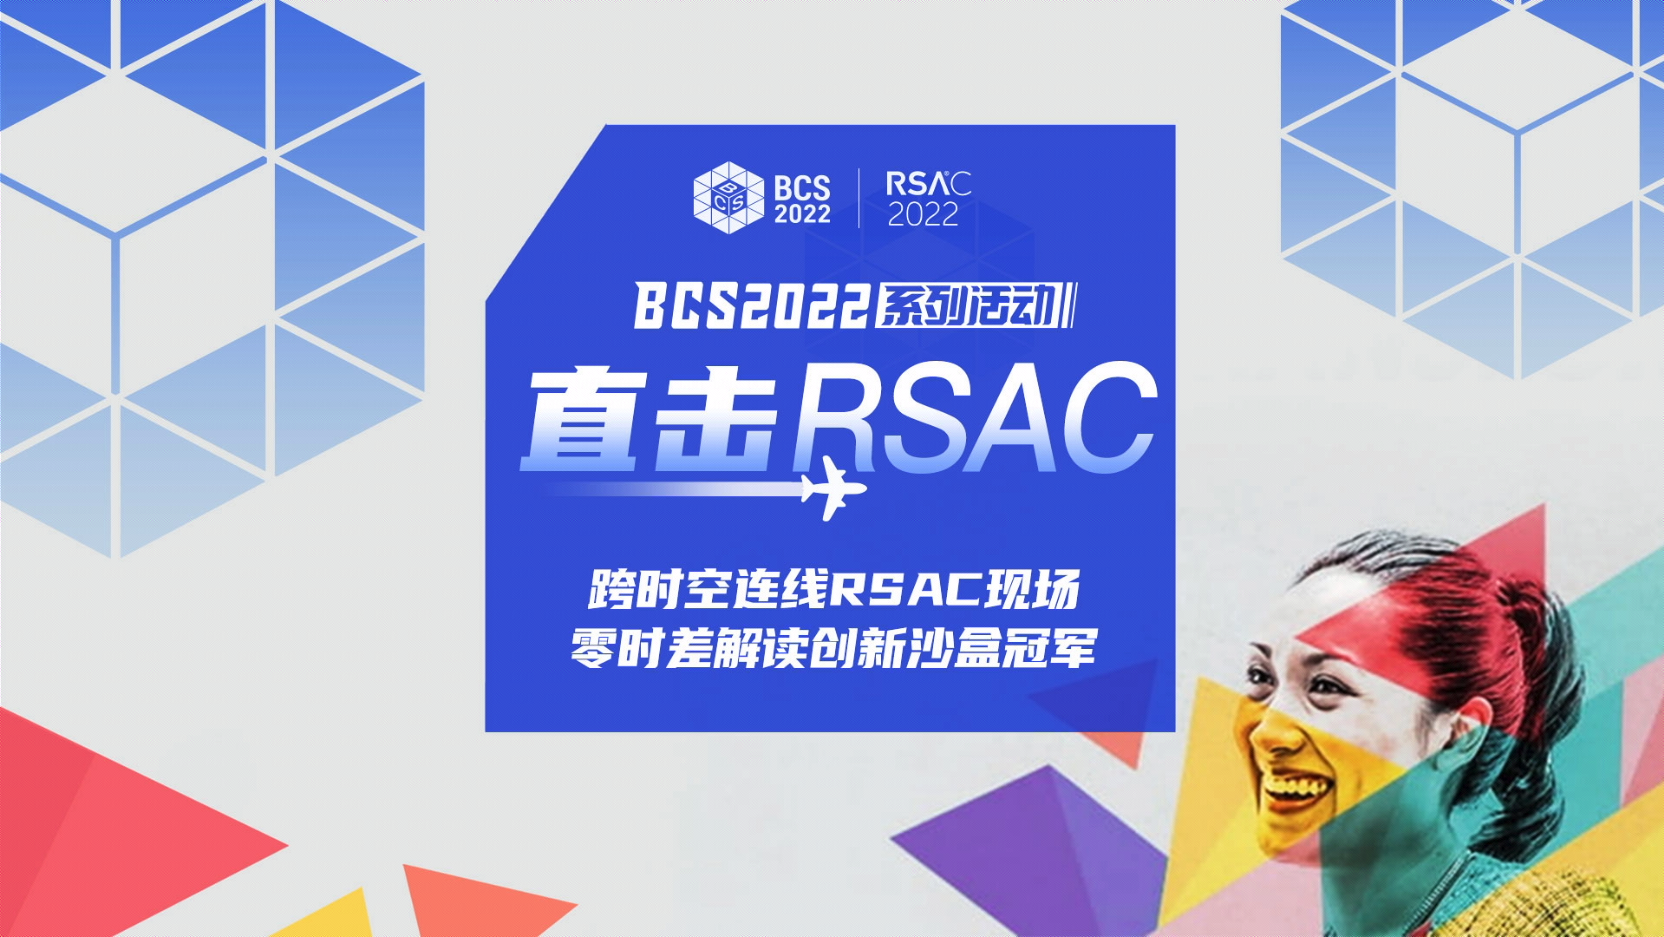 RSAC 2022 | 跨时空连线RSAC现场 零时差解读创新沙盒冠军